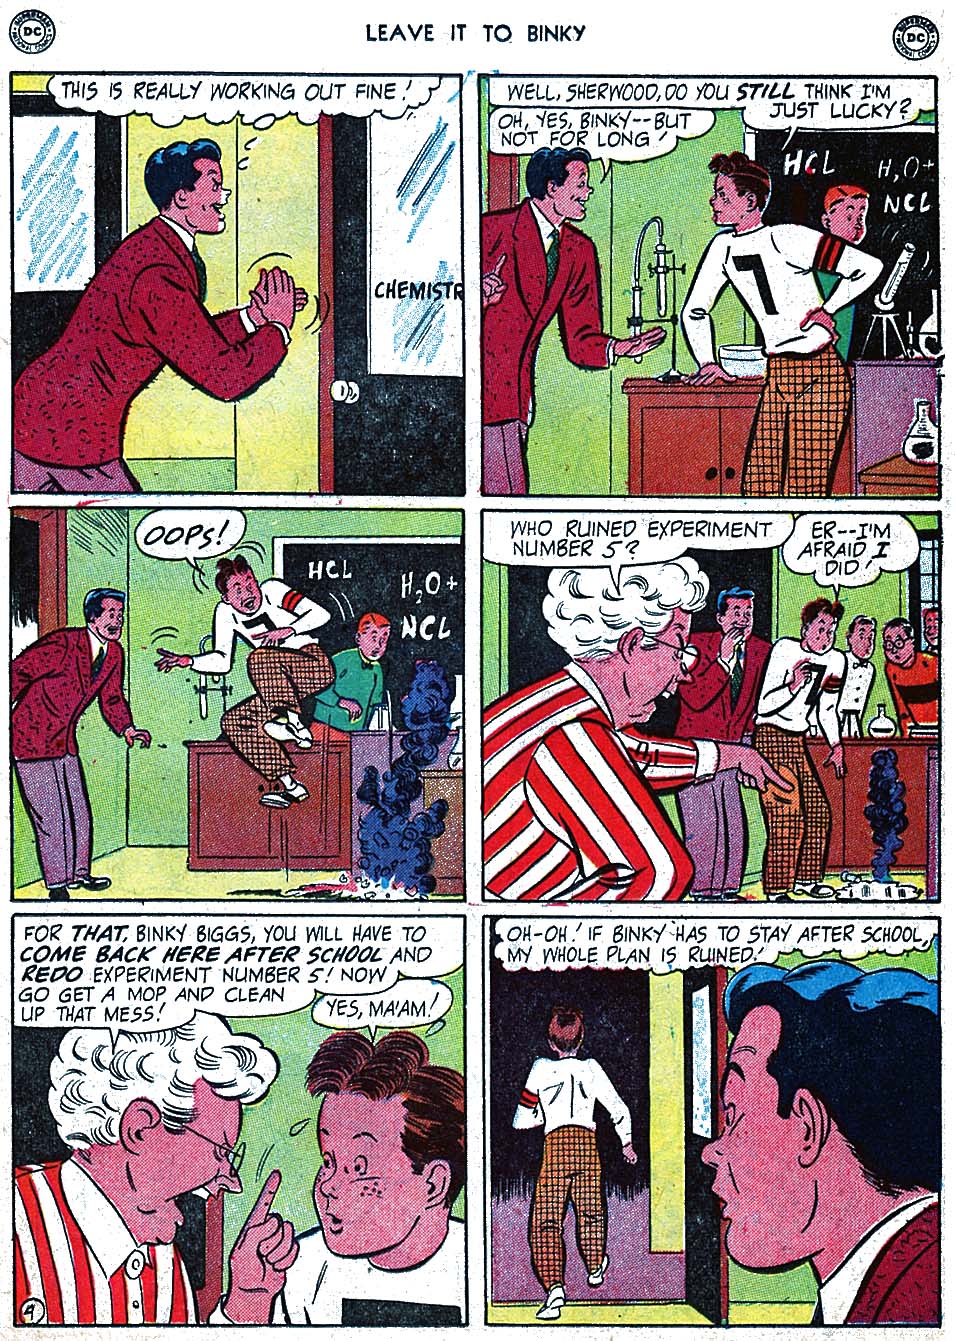 Read online Leave it to Binky comic -  Issue #19 - 29